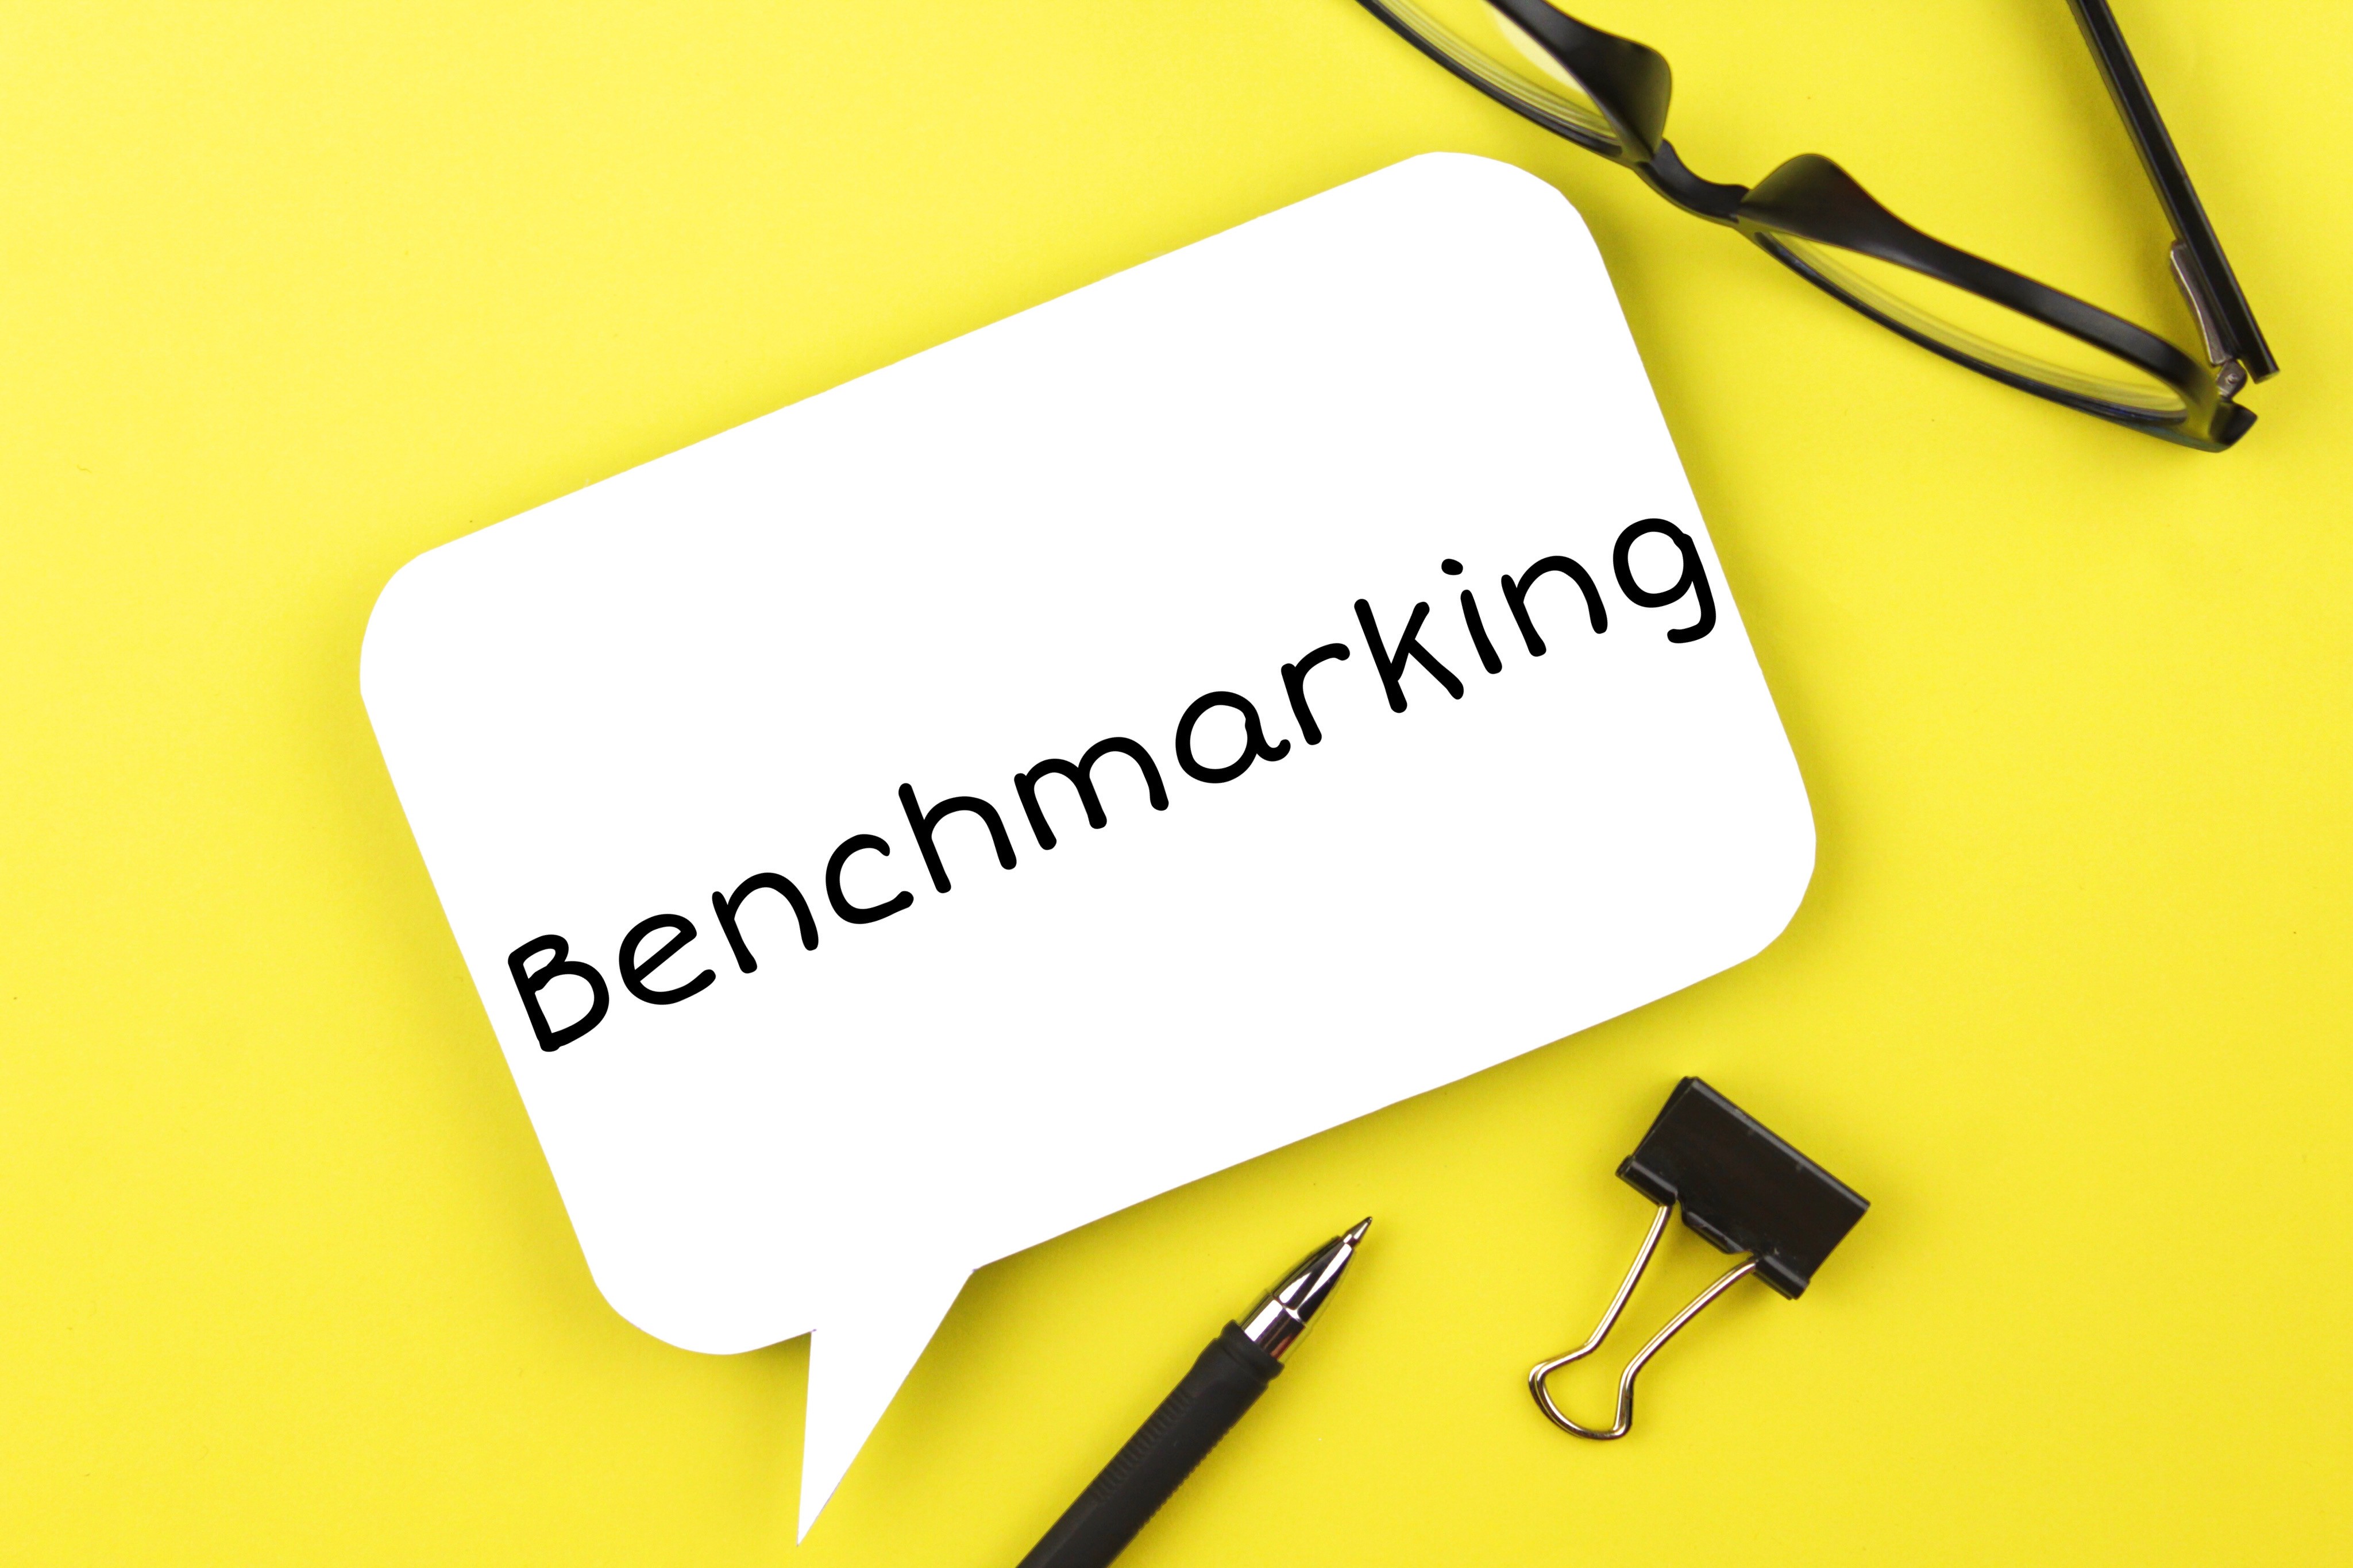 benchmarking